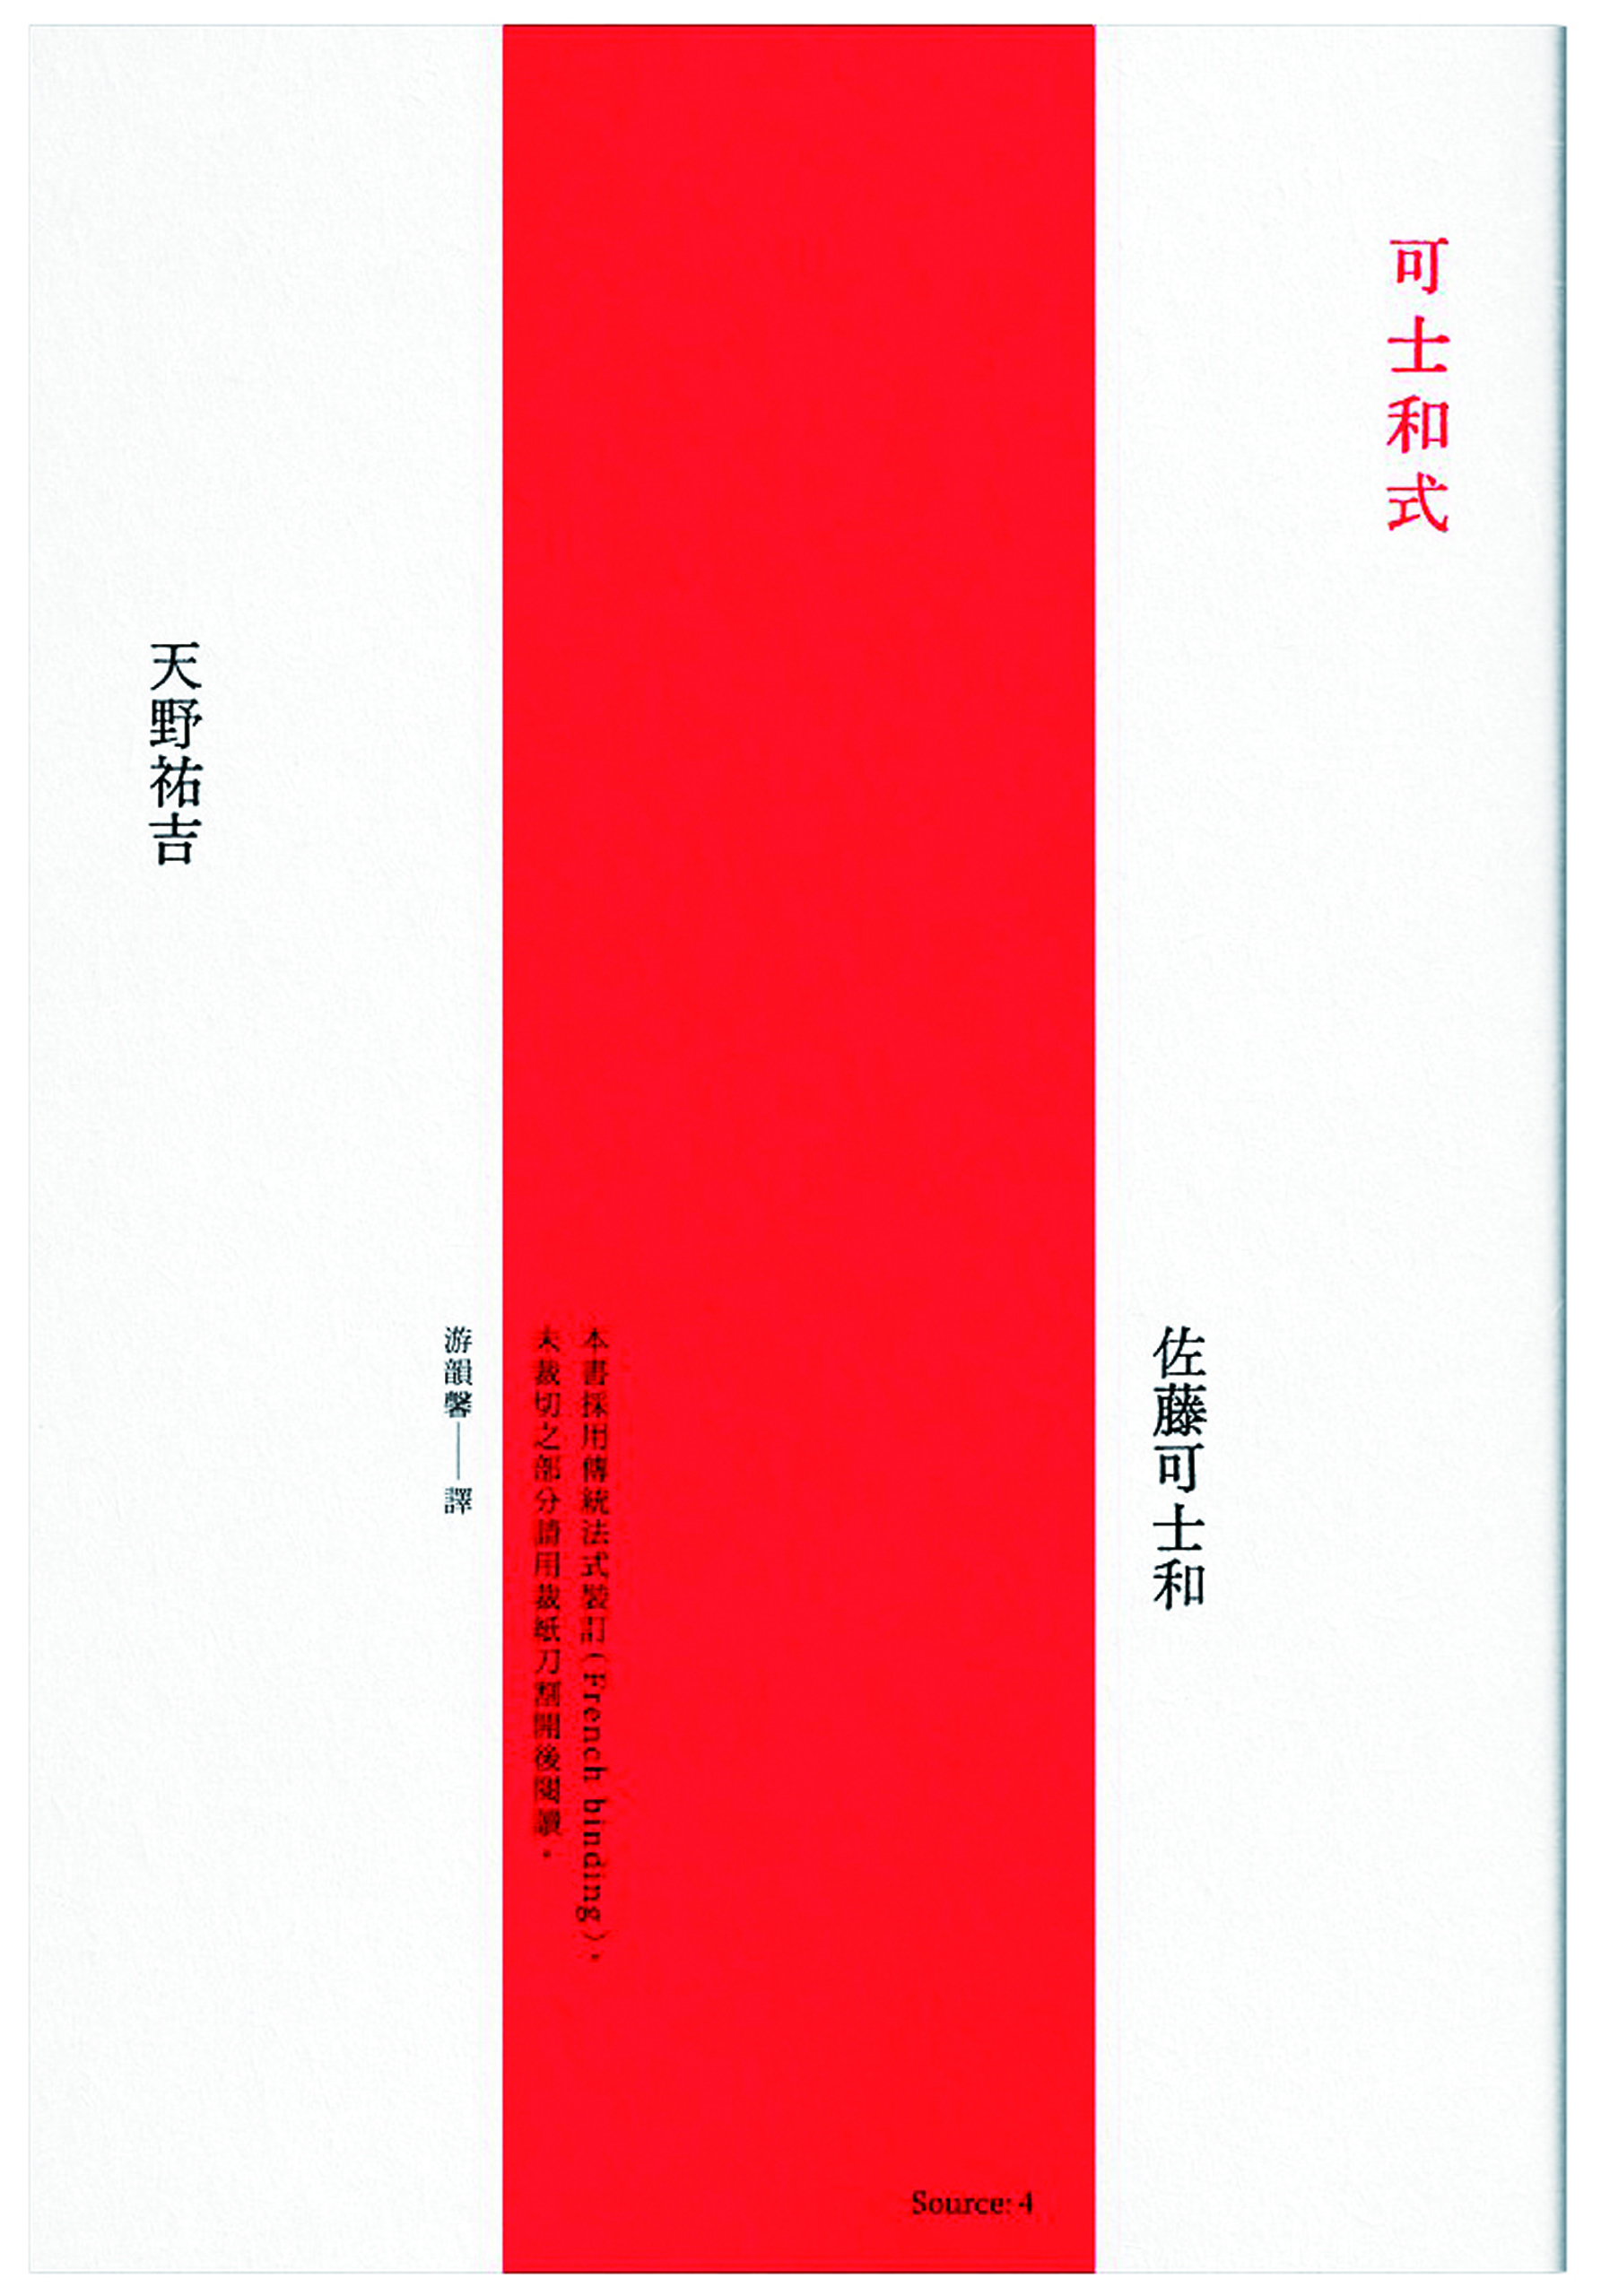 KASHIWA SATO - BOOK DESIGN